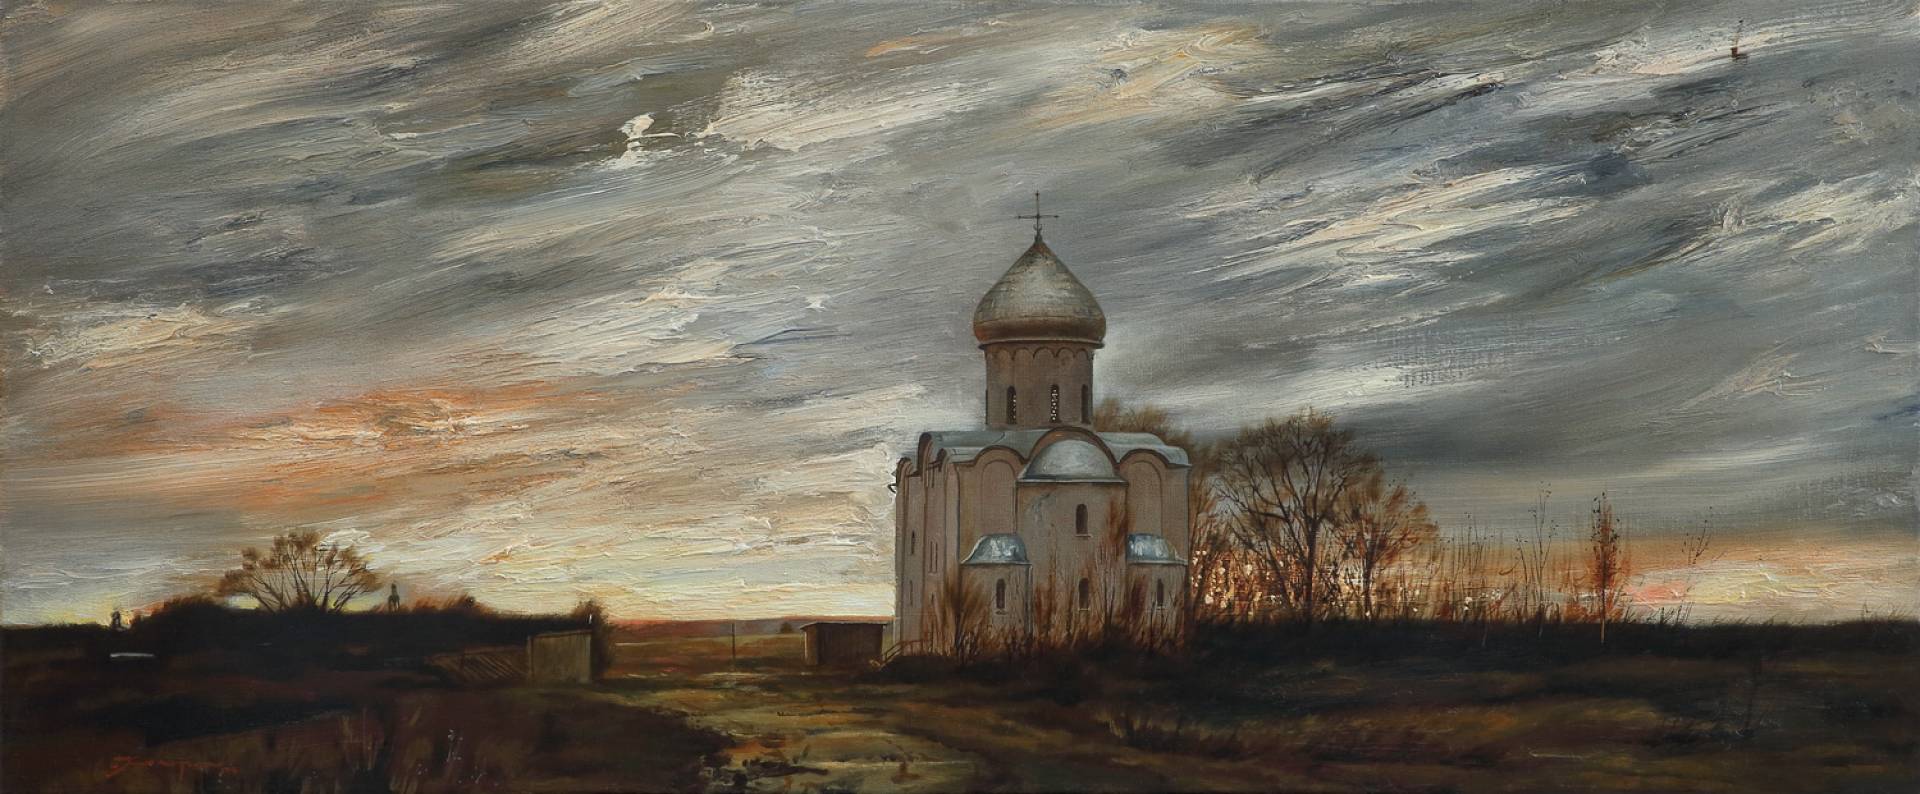 Sunset in Novgorod - 1, Ilya Khokhrin, Buy the painting Oil